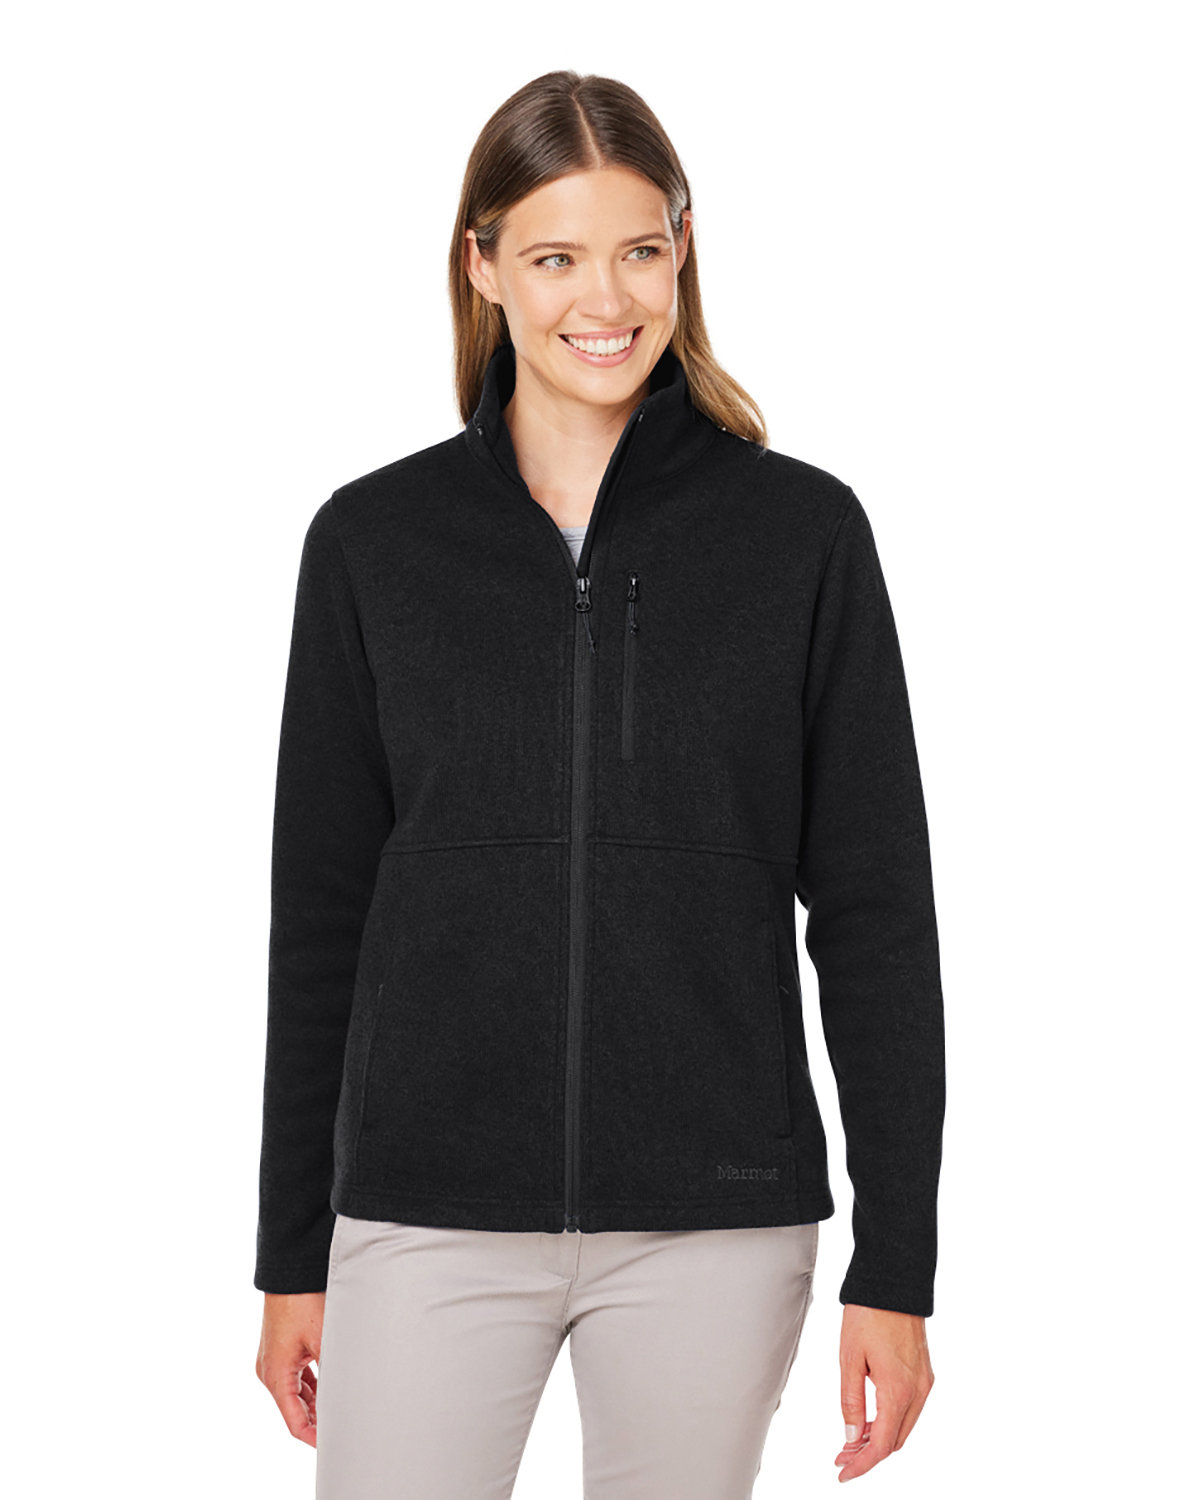 Marmot Ladies' Dropline Sweater Fleece Jacket BLACK 